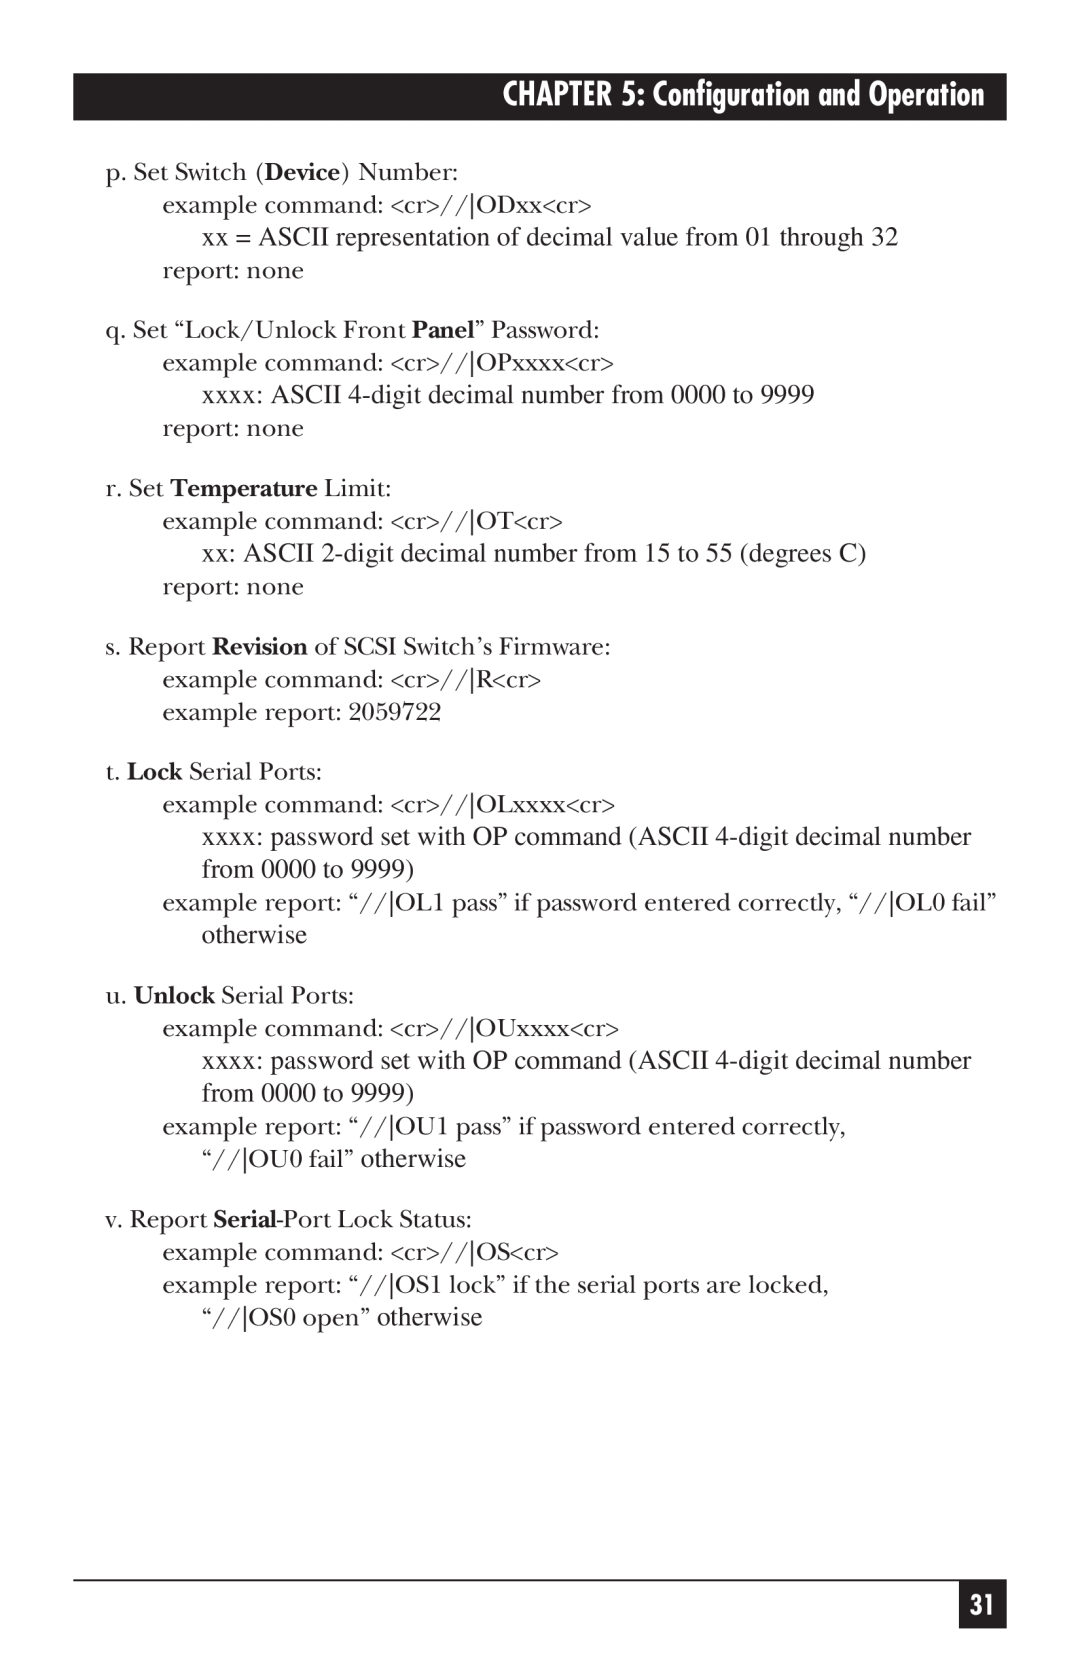 Black Box SW487A-R2 manual Configuration and Operation, r. Set Temperature Limit 